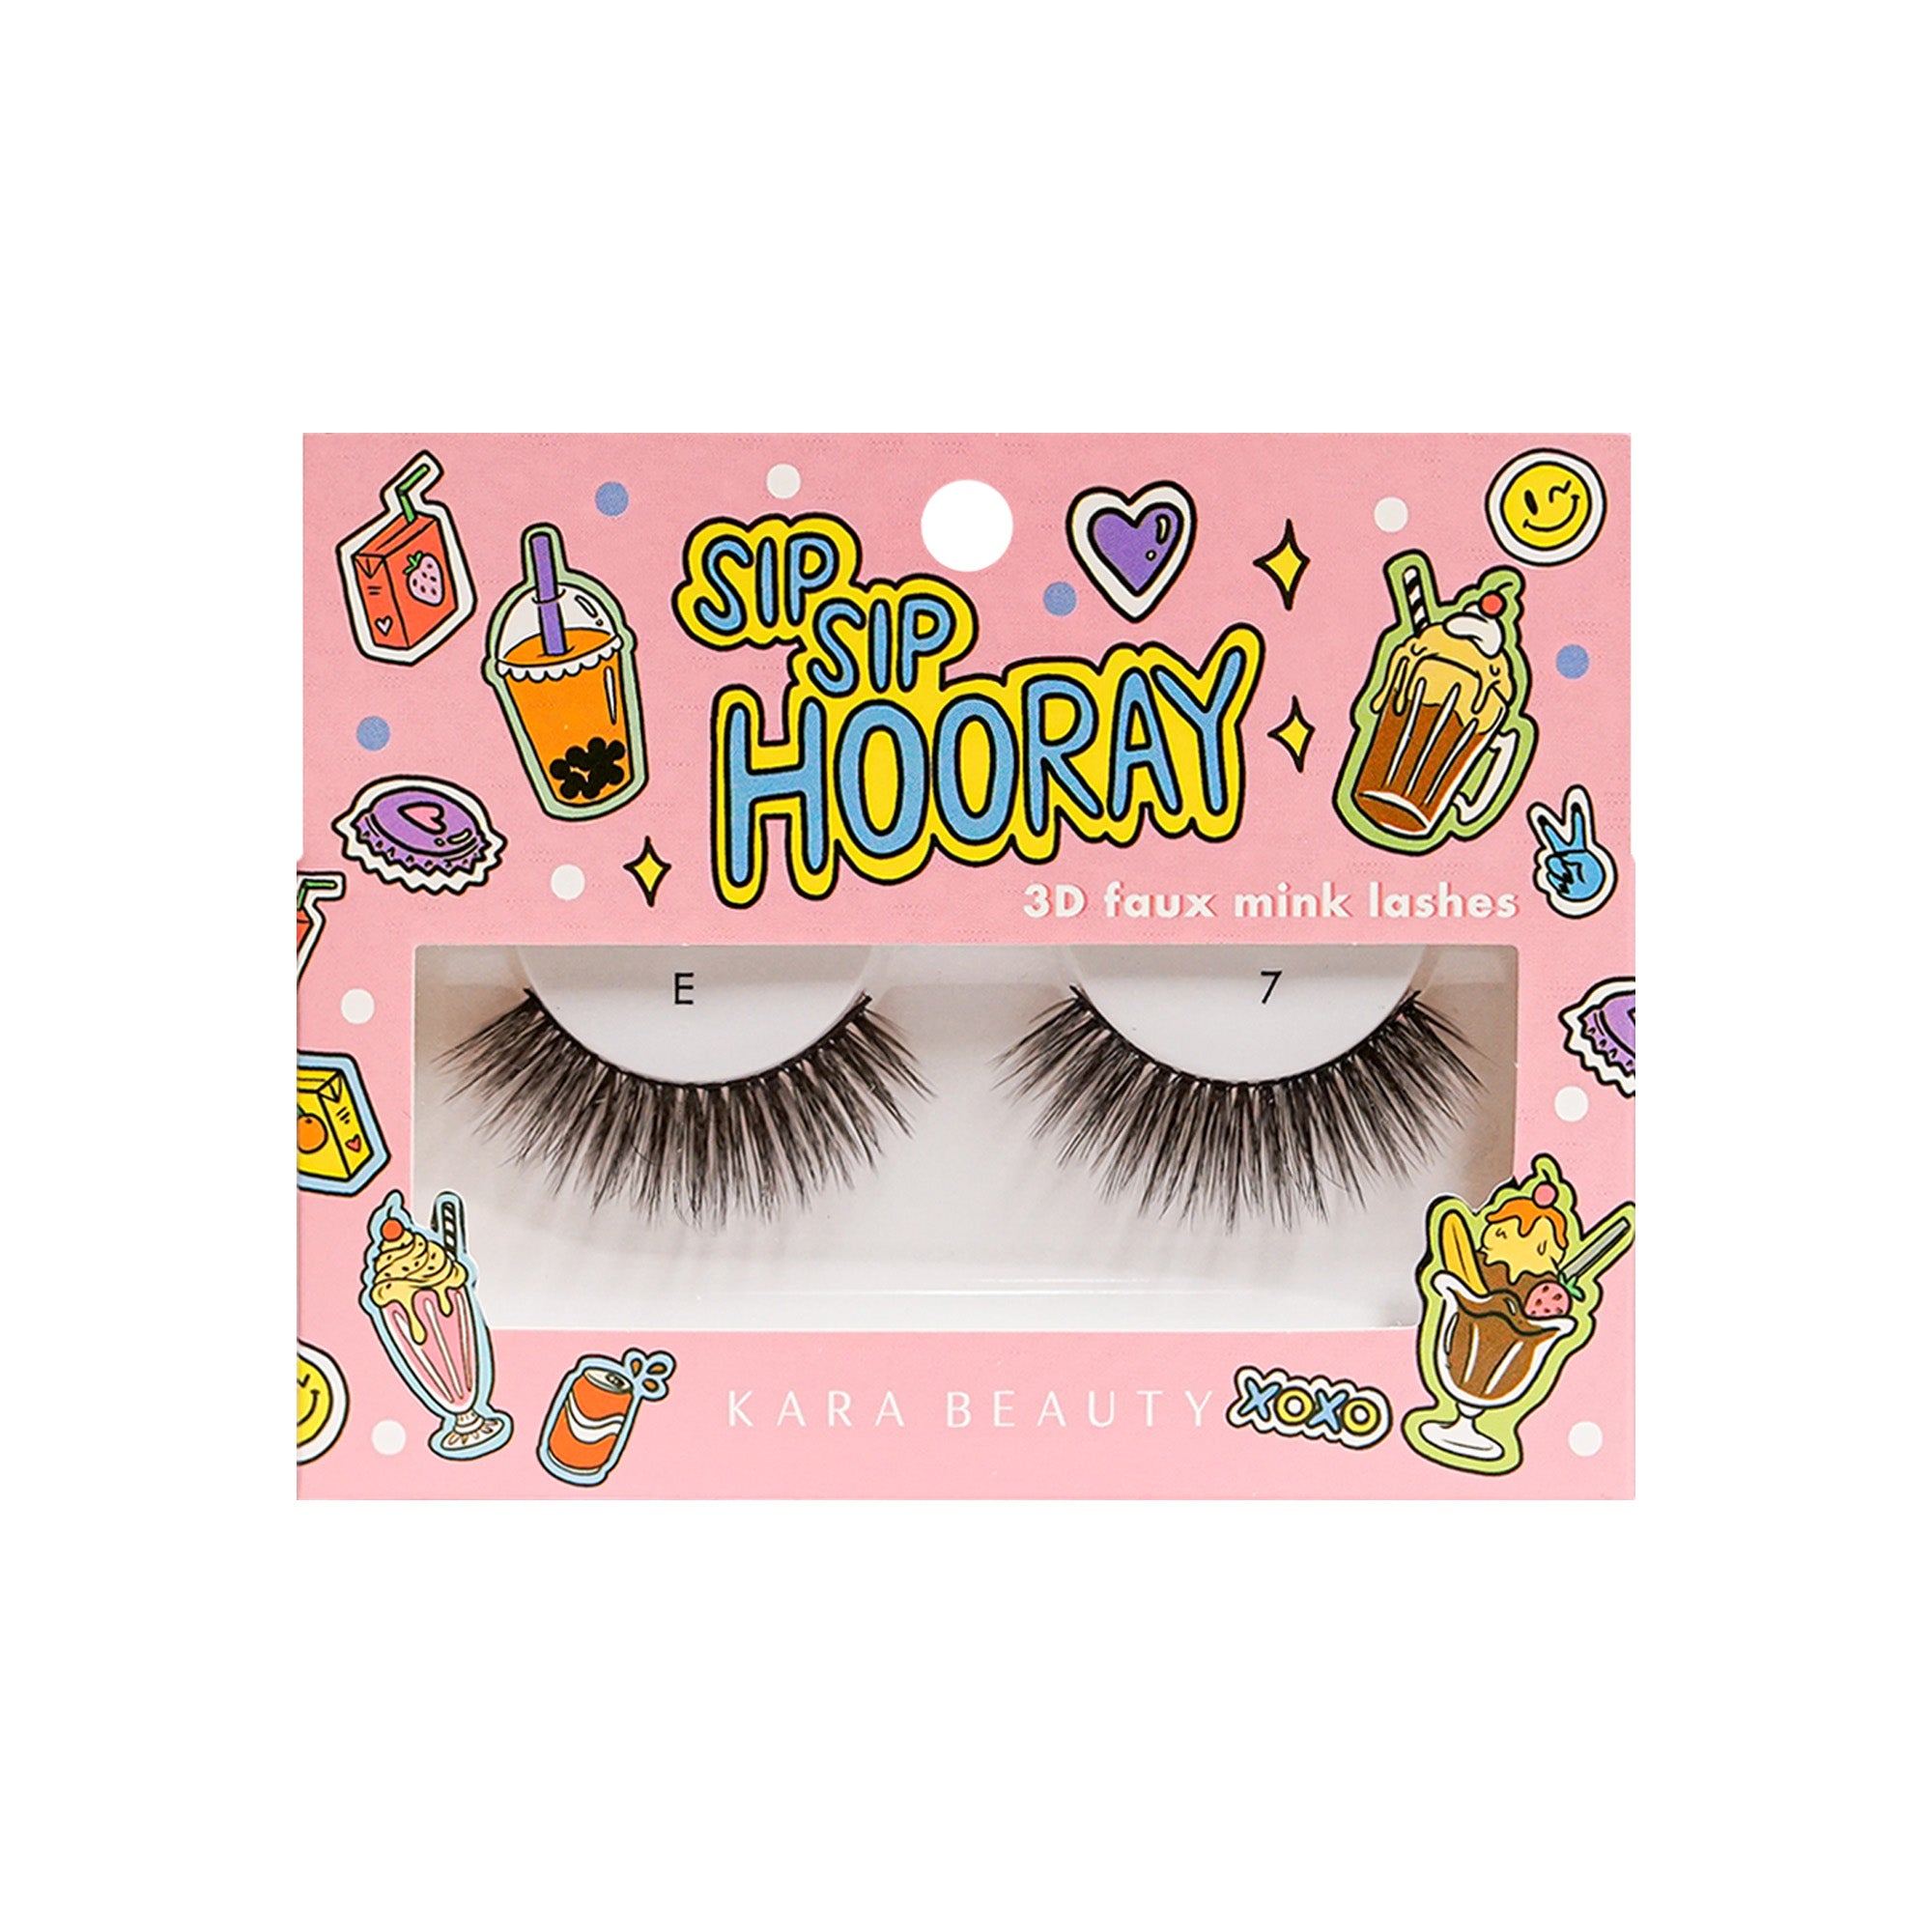 Kara Beauty's Sip Sip Hooray 3D Faux Mink - Synthetic Strip Eyelashes Style E7